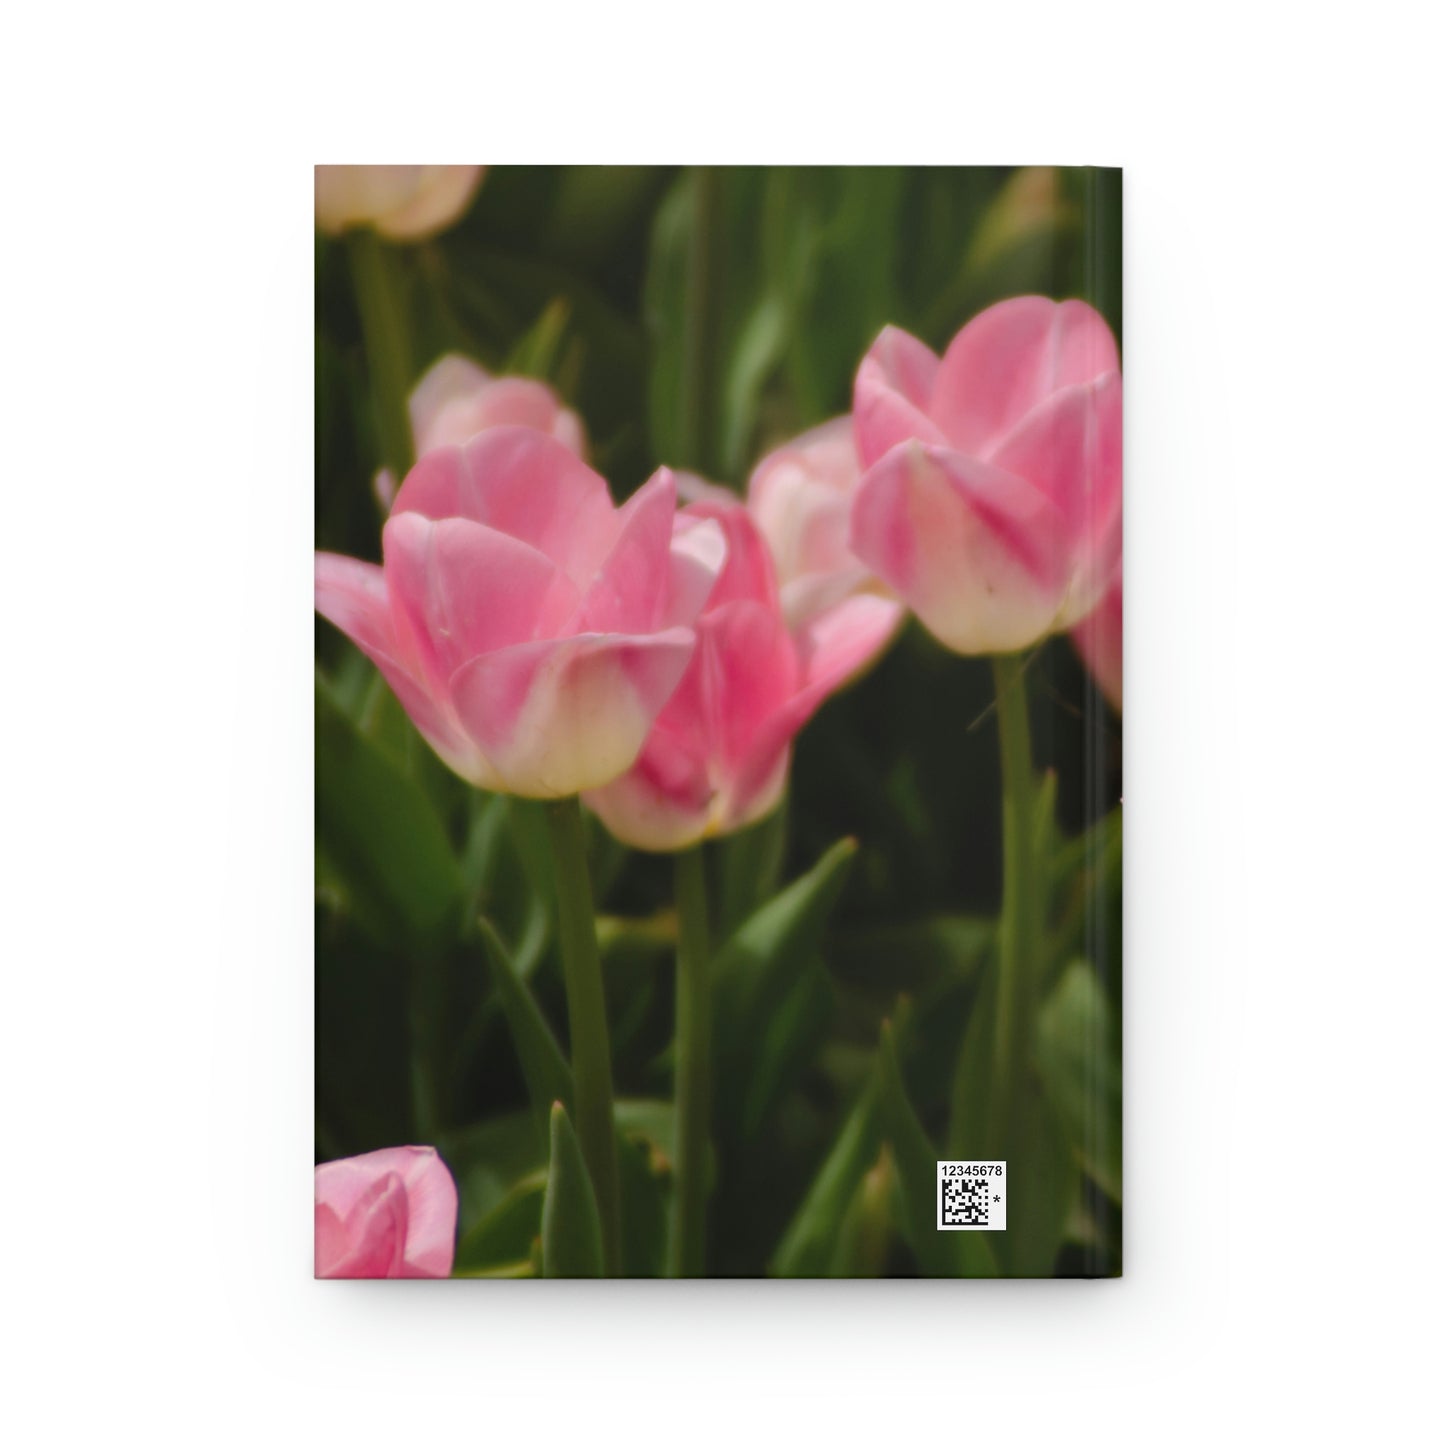 Flowers 17 Hardcover Journal Matte